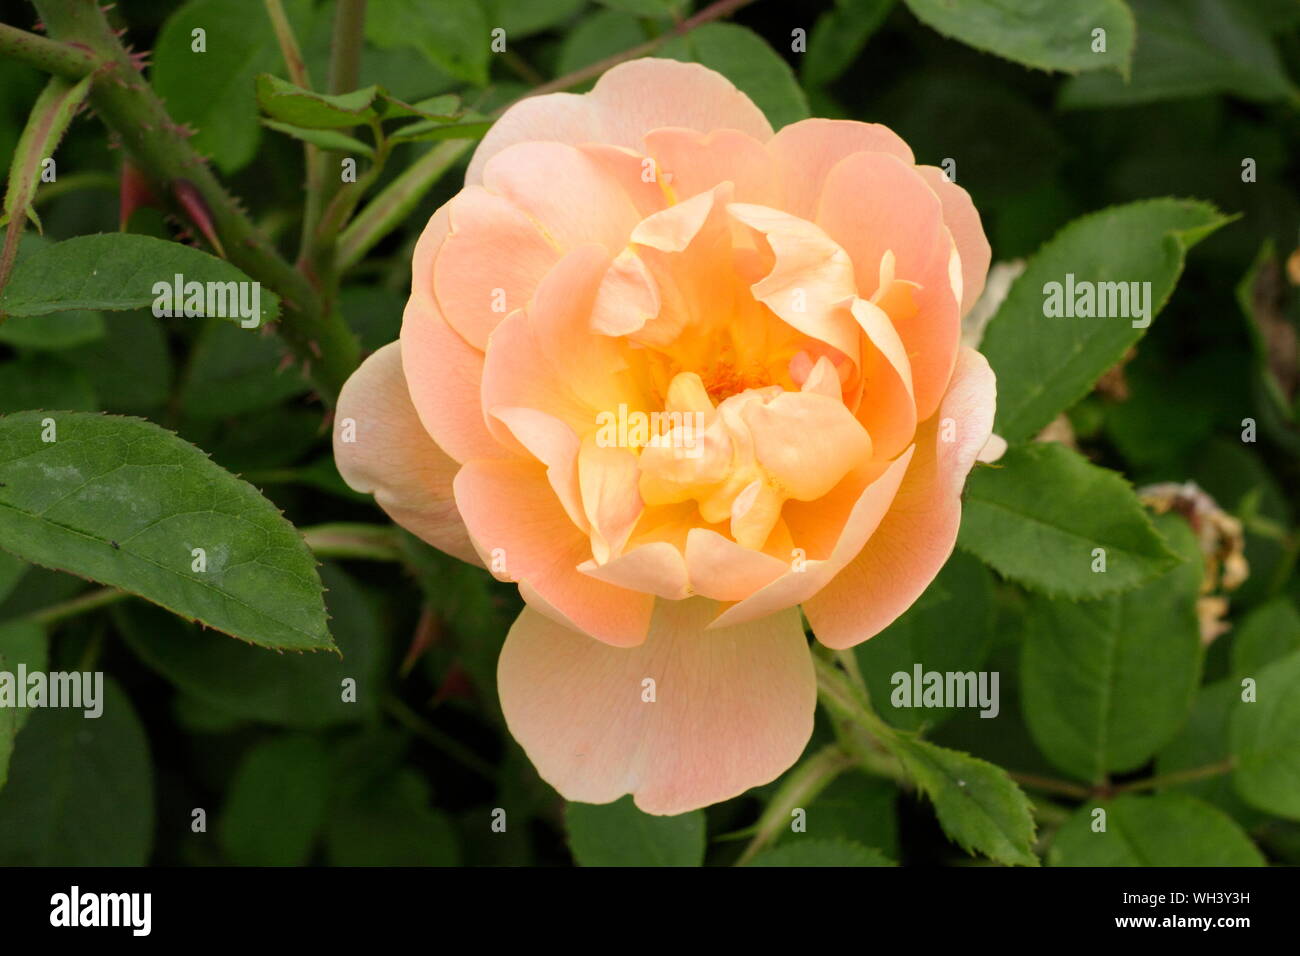 La Alondra Rosa 'ascendente' English arbusto aumentaron un criador, David Austin. Foto de stock